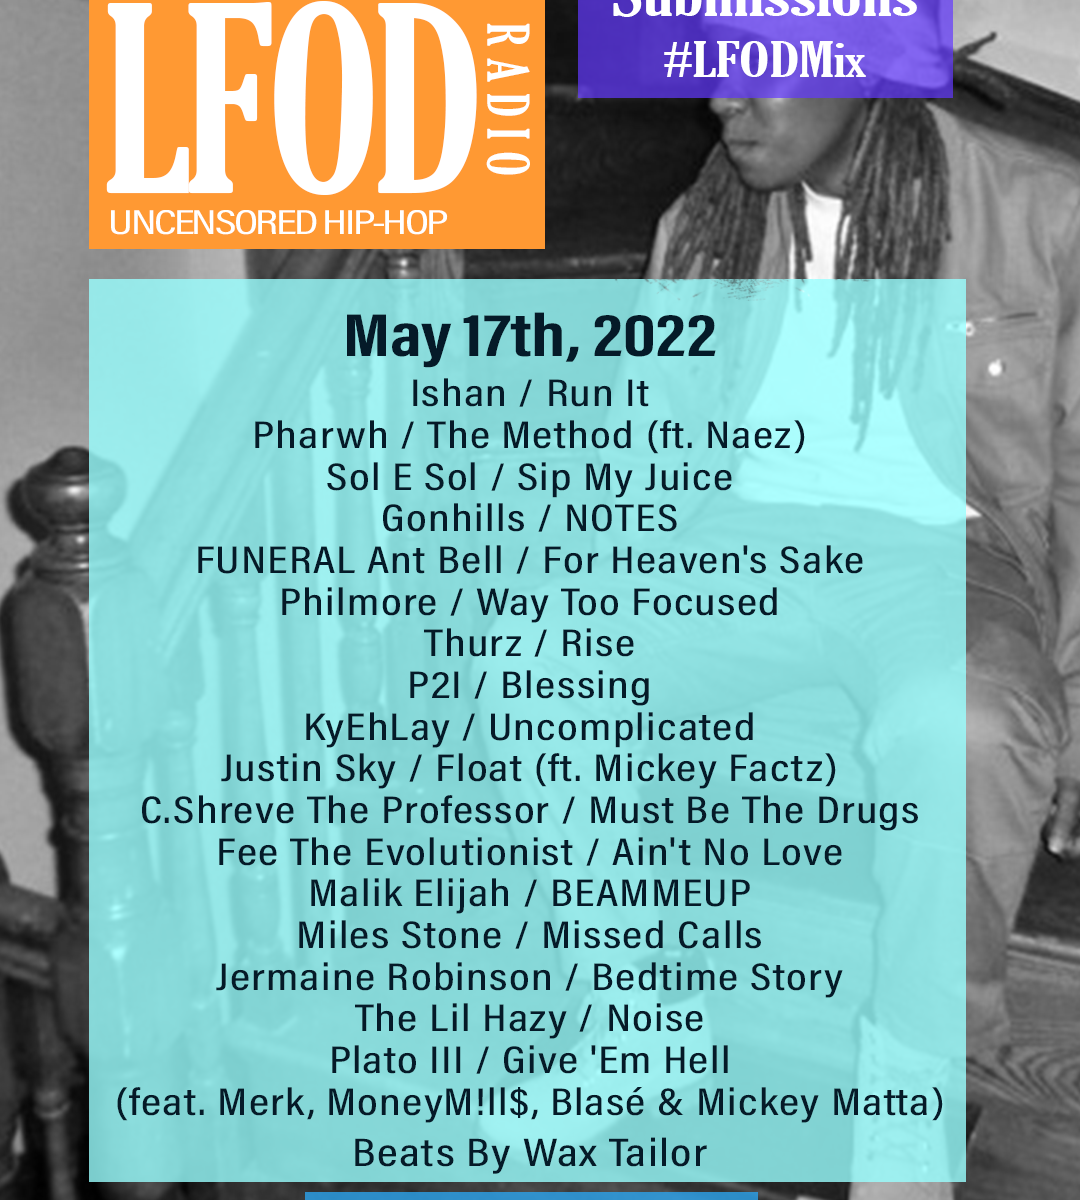 5.17.22 LFOD Radio Submissions Playlist